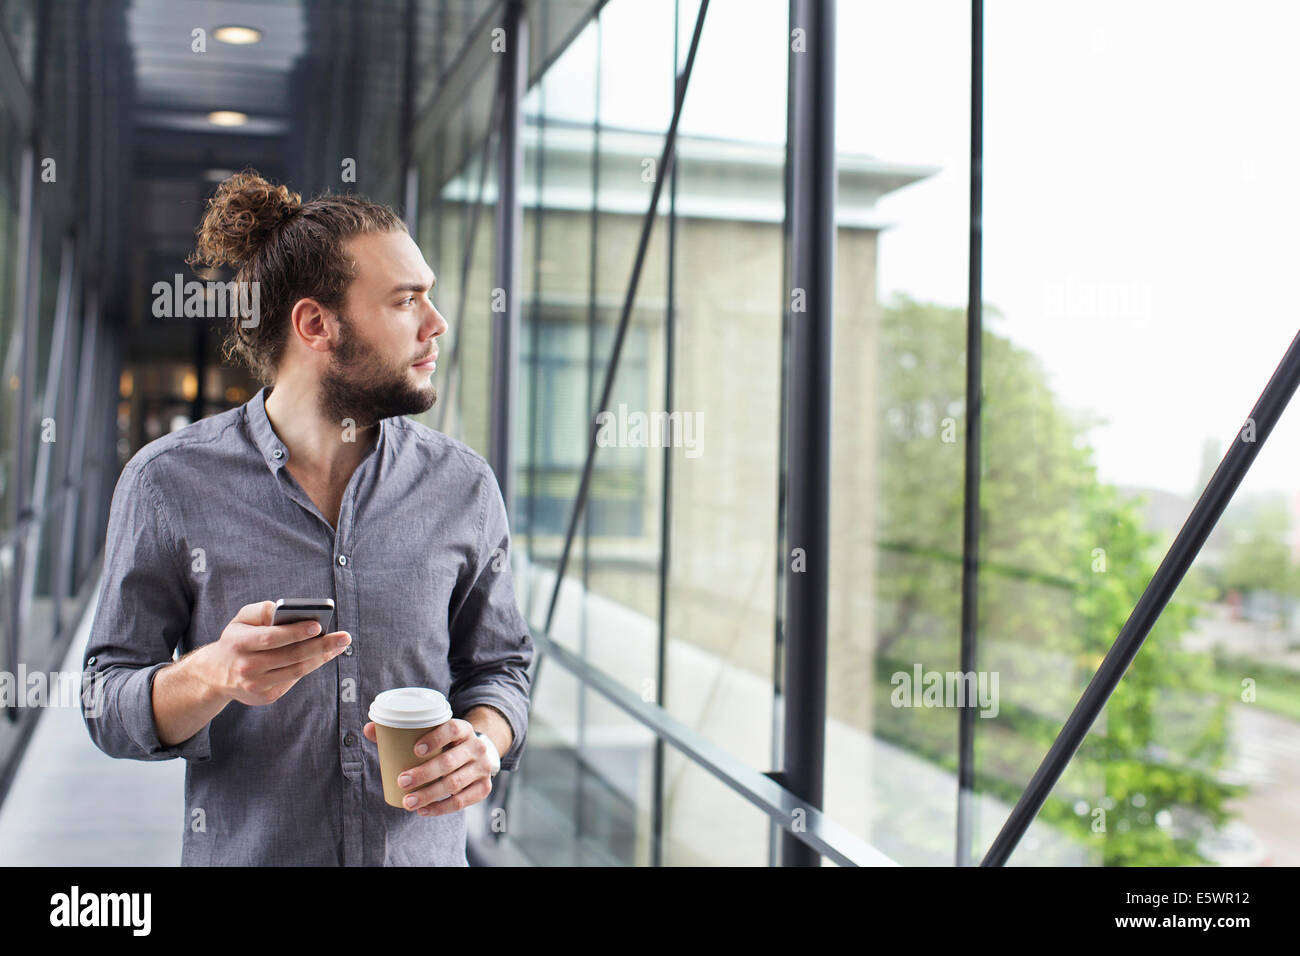 Man with smartphone on coffee break Stock Photo